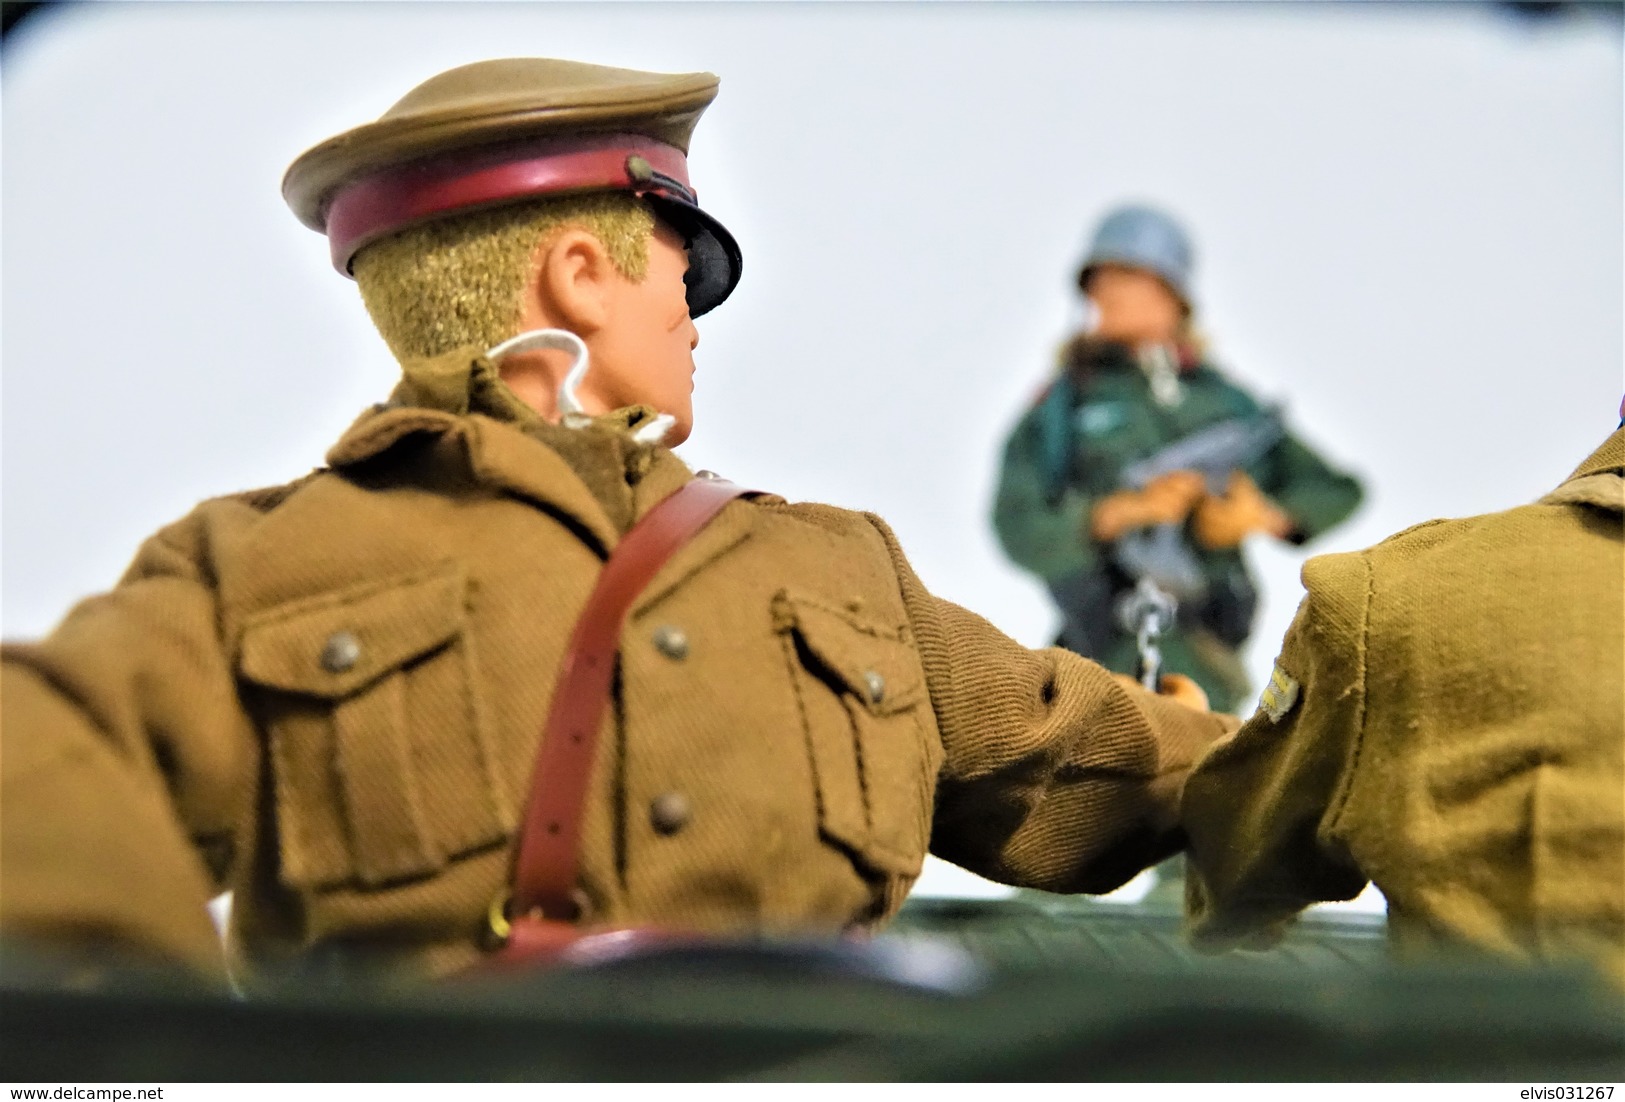 Vintage ACTION MAN : BRITISH ARMY OFFICER - Original Hasbro 1970's - Palitoy - GI JOE